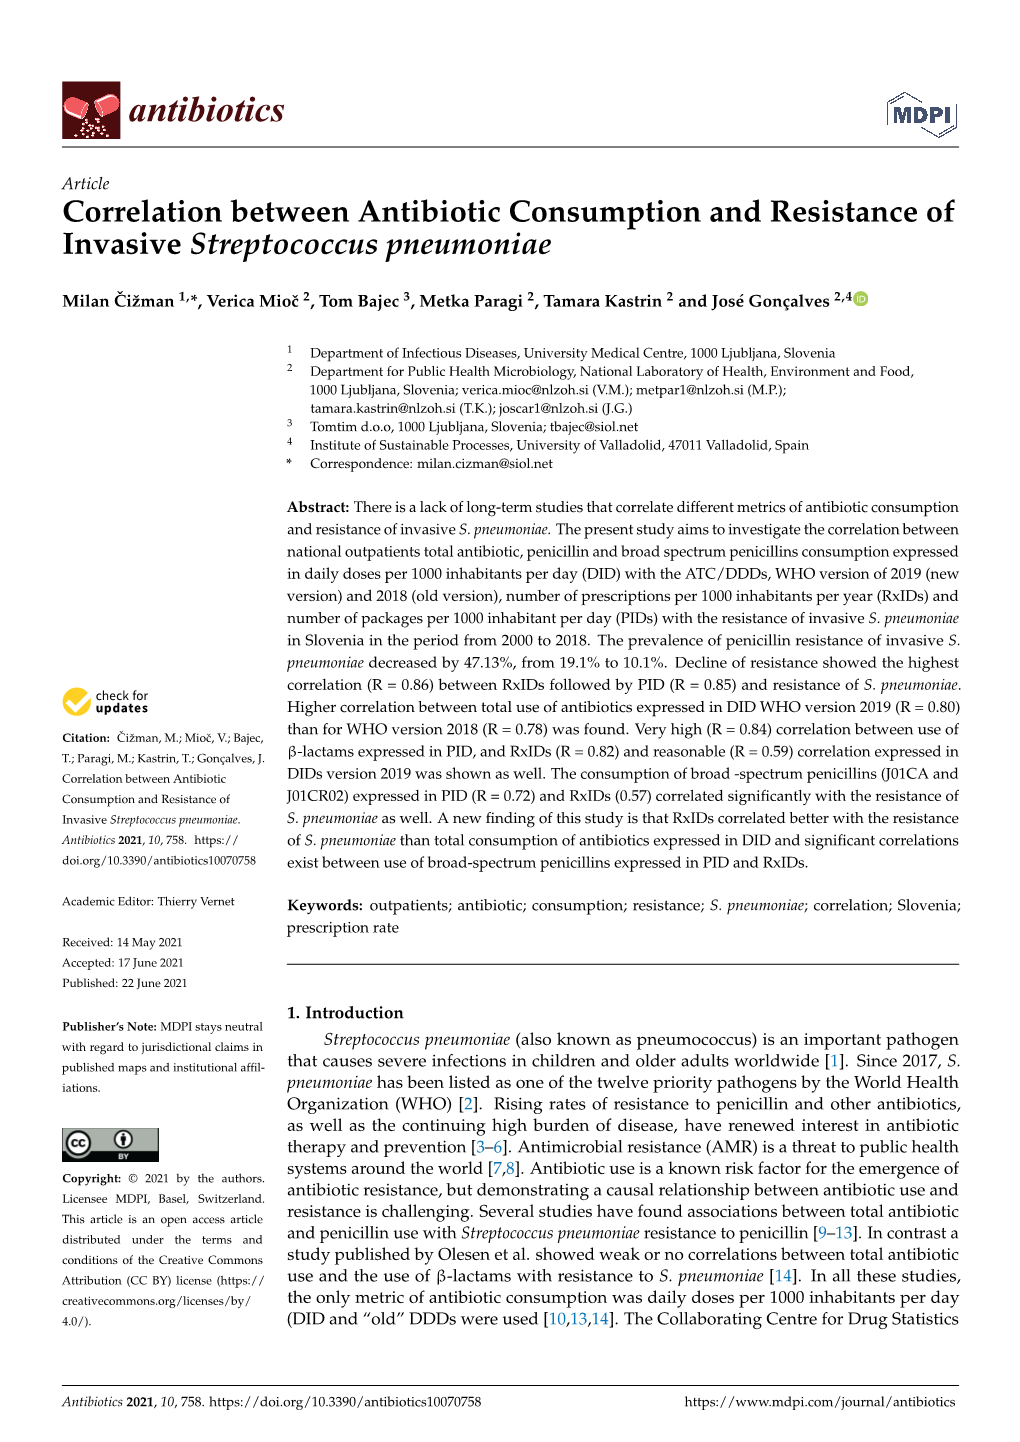 Correlation Between Antibiotic Consumption and Resistance of Invasive Streptococcus Pneumoniae